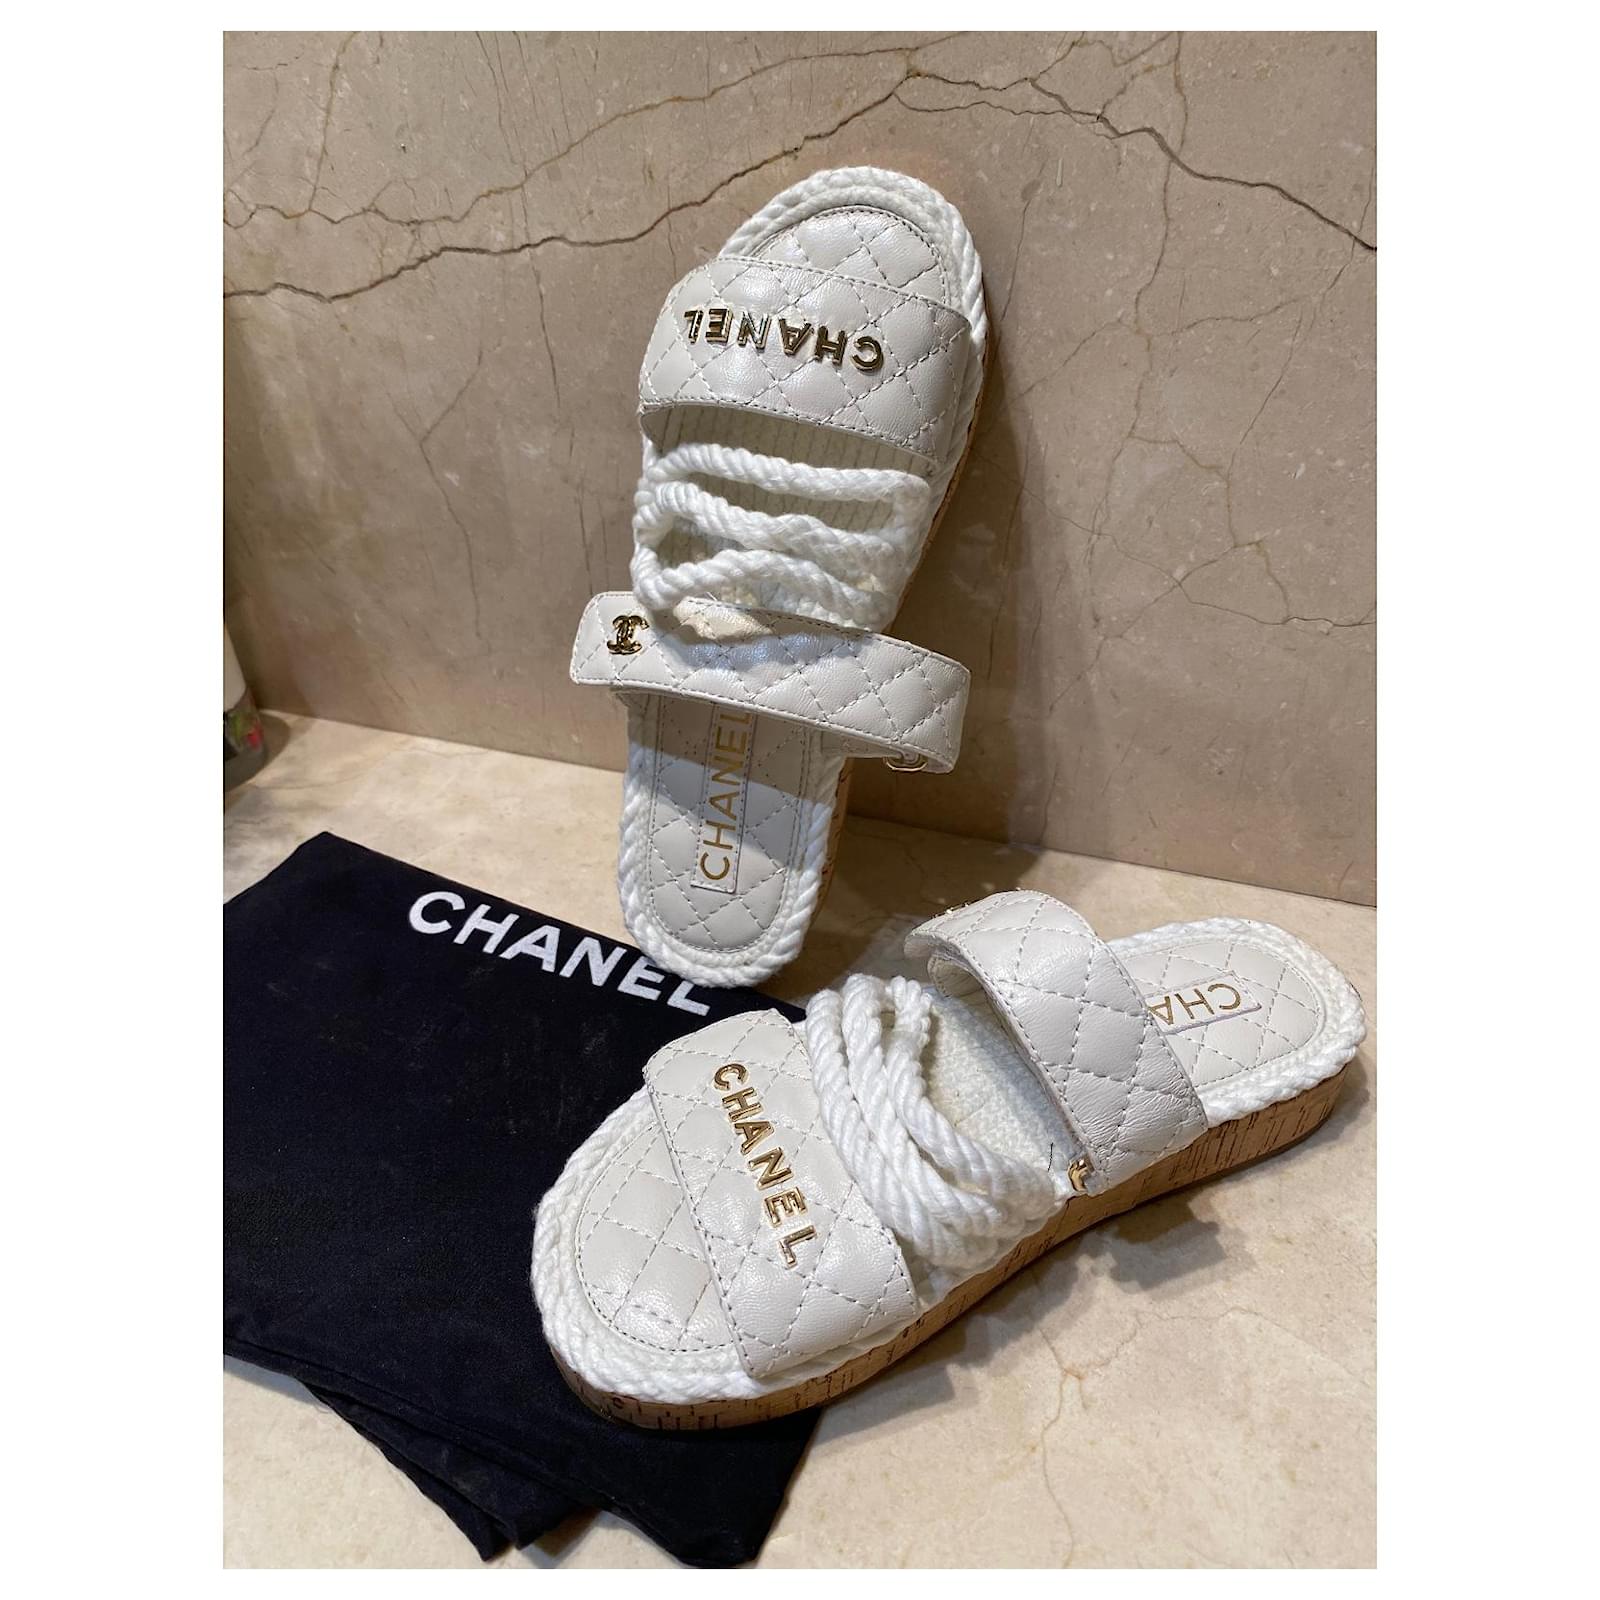 Chanel Dad Sandalen/Mules in weißer Kordel